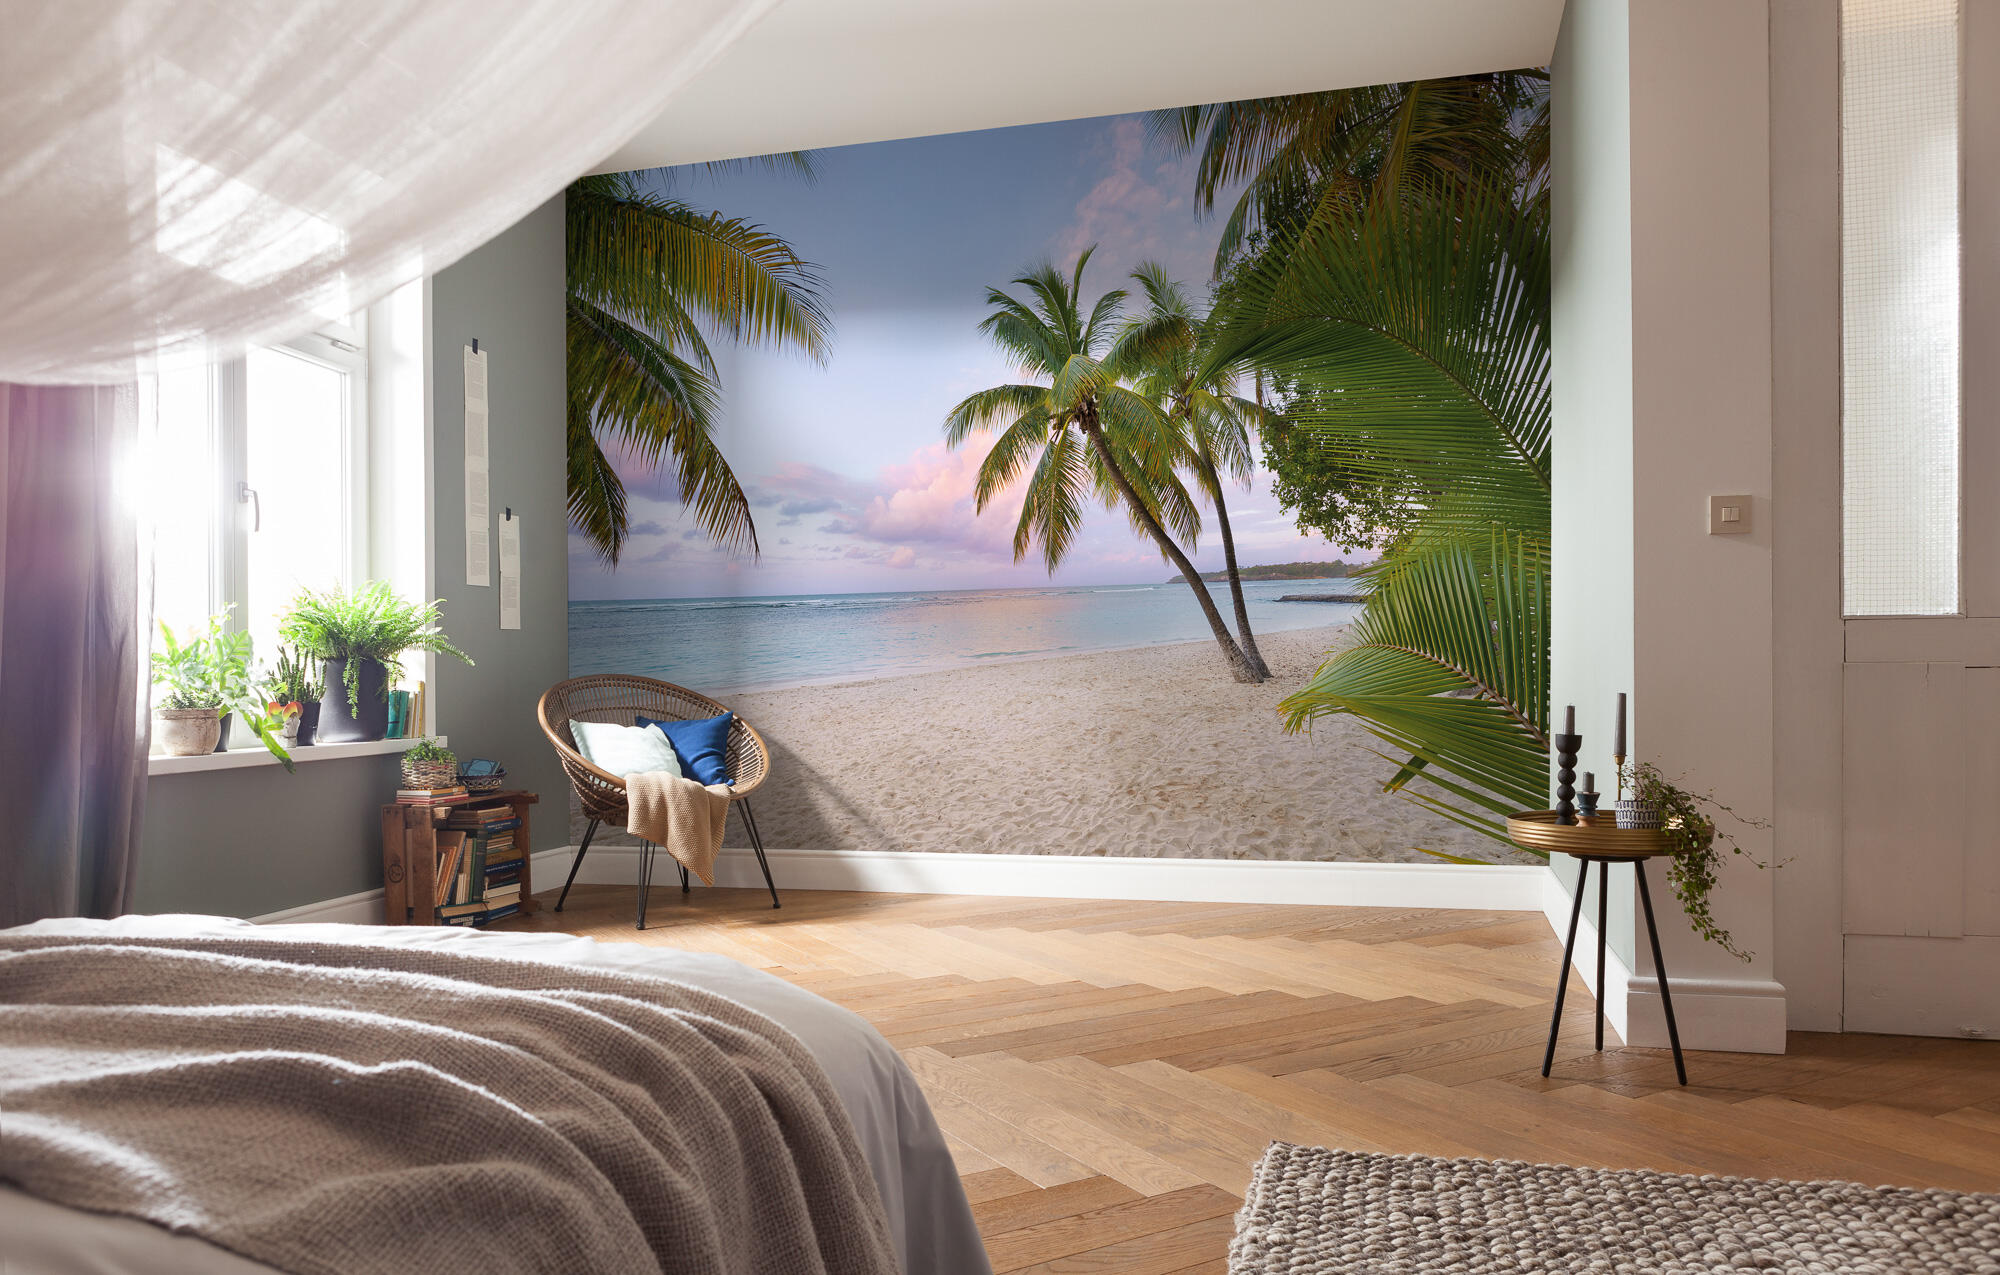 Mural paradise morning de 368 x 248.0 cm